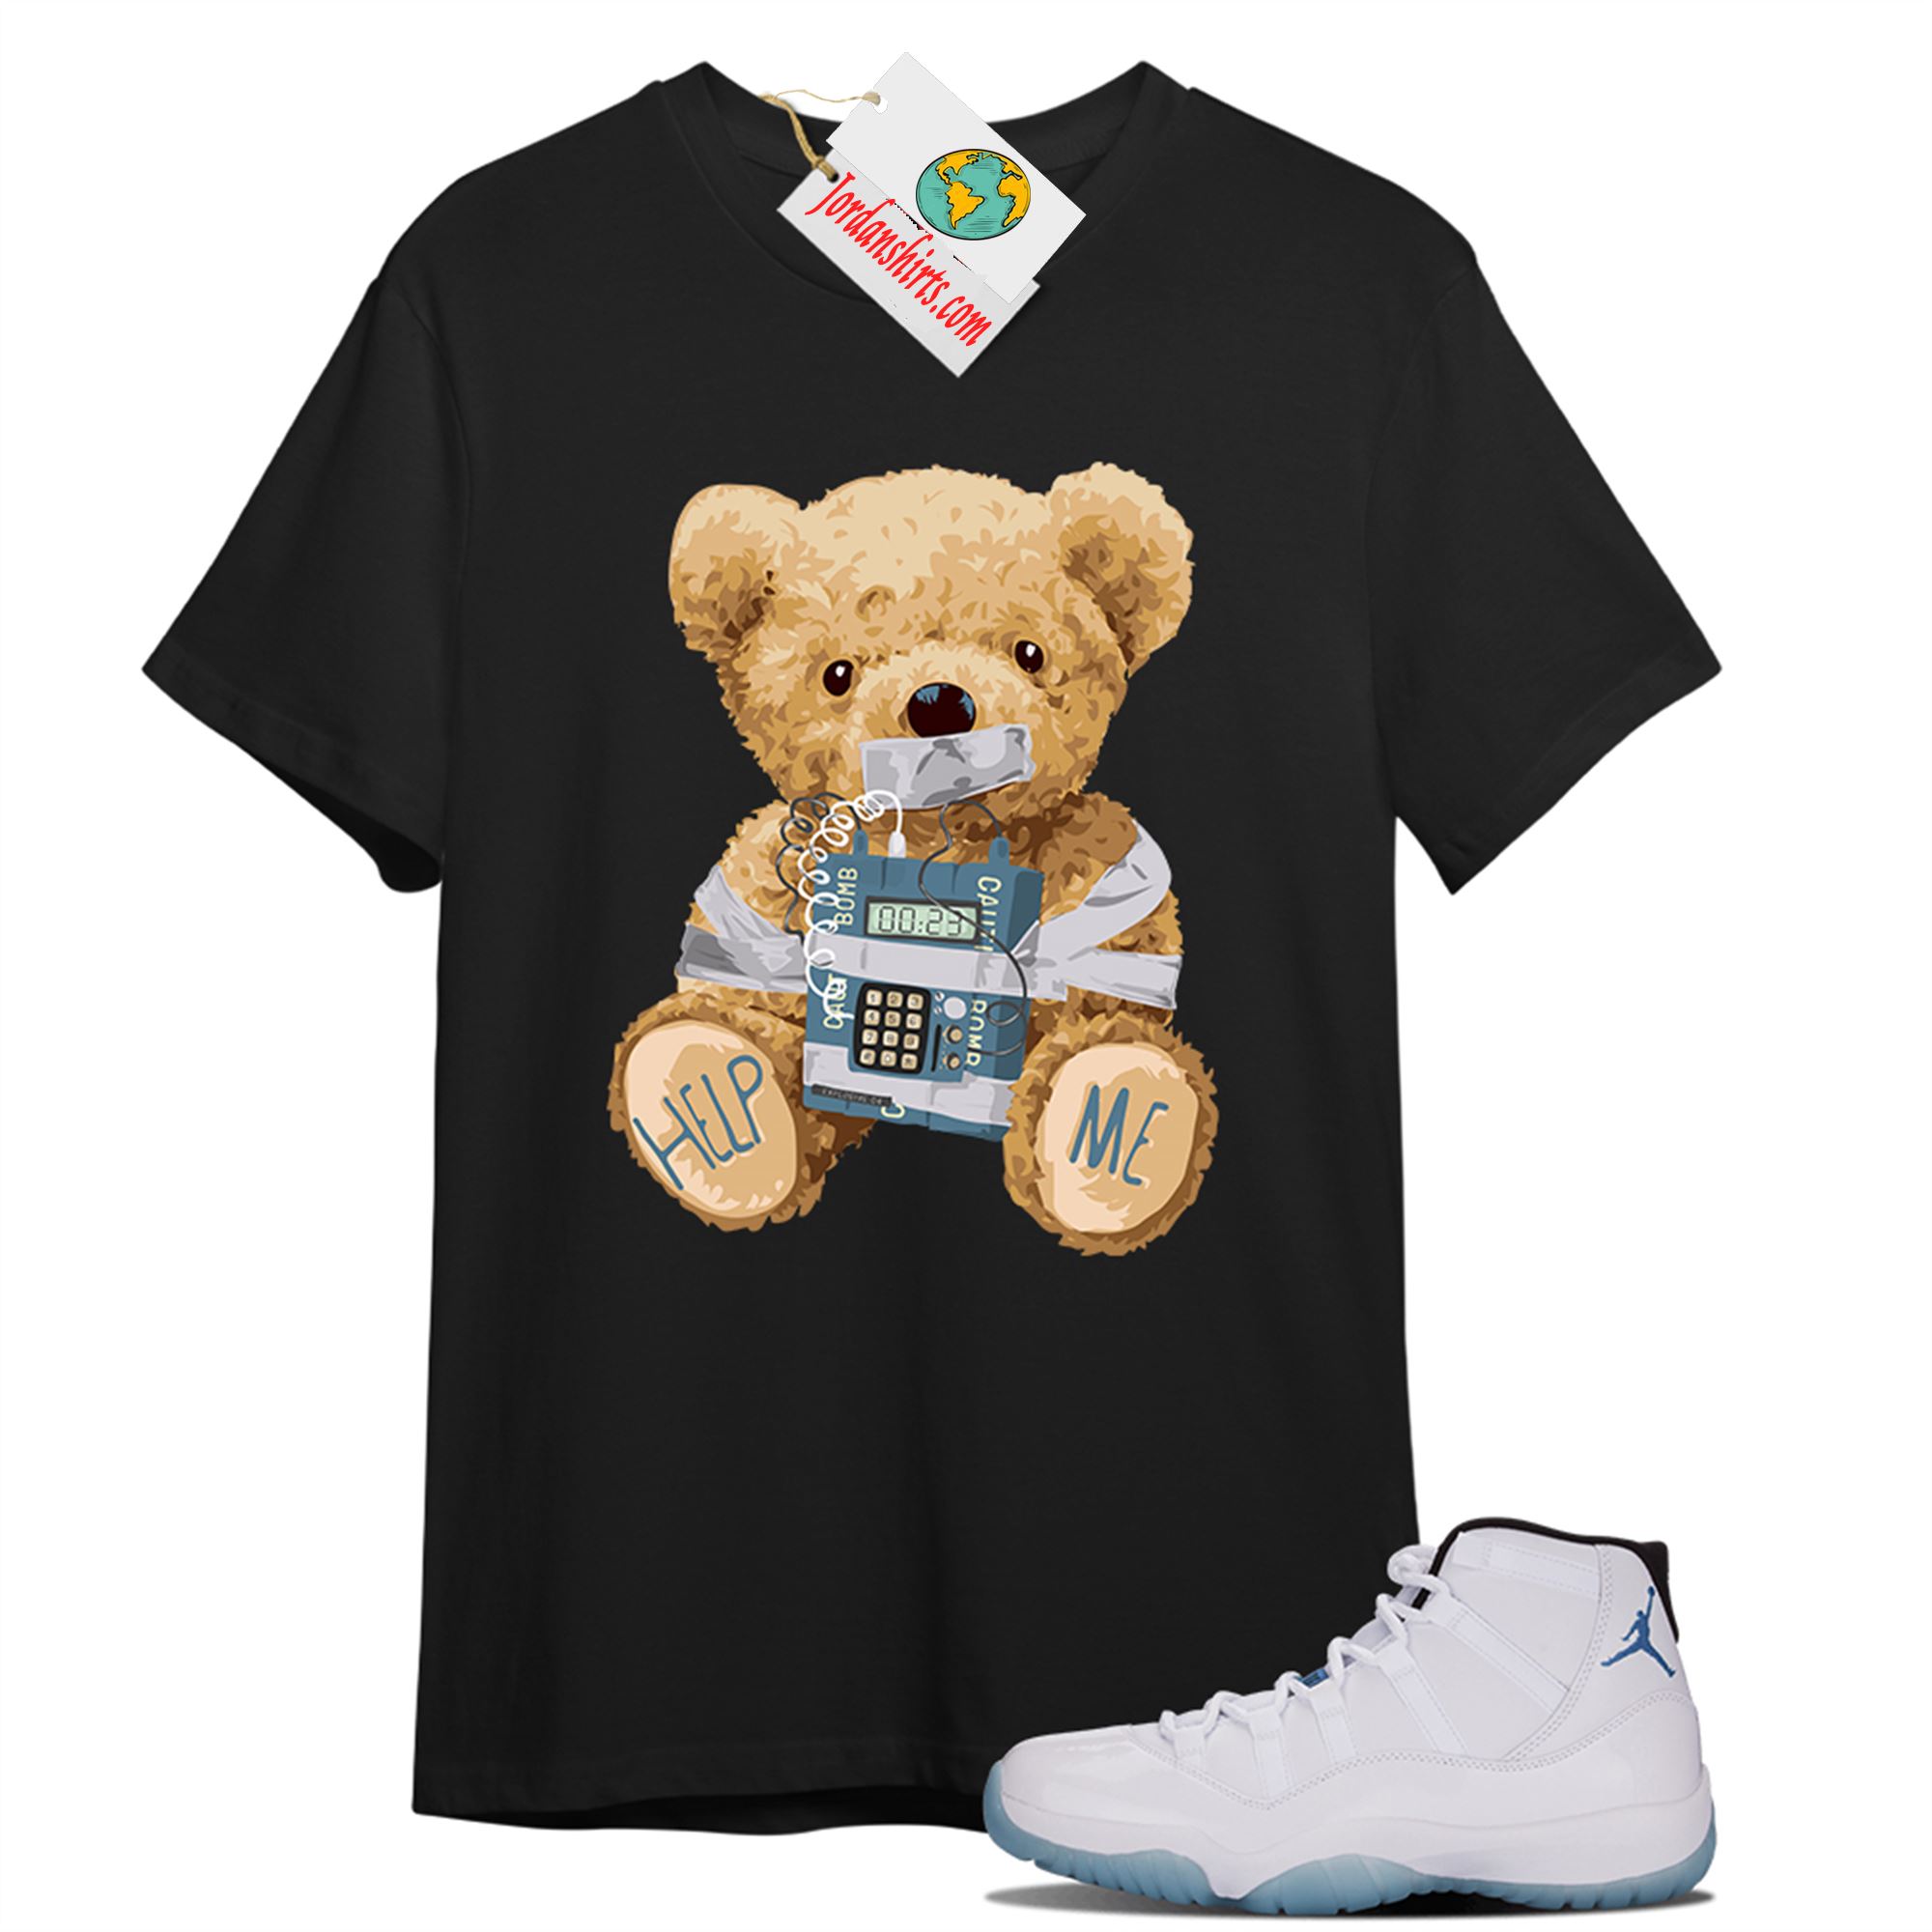 Jordan 11 Shirt, Teddy Bear Bomb Black T-shirt Air Jordan 11 Legend Blue 11s Plus Size Up To 5xl